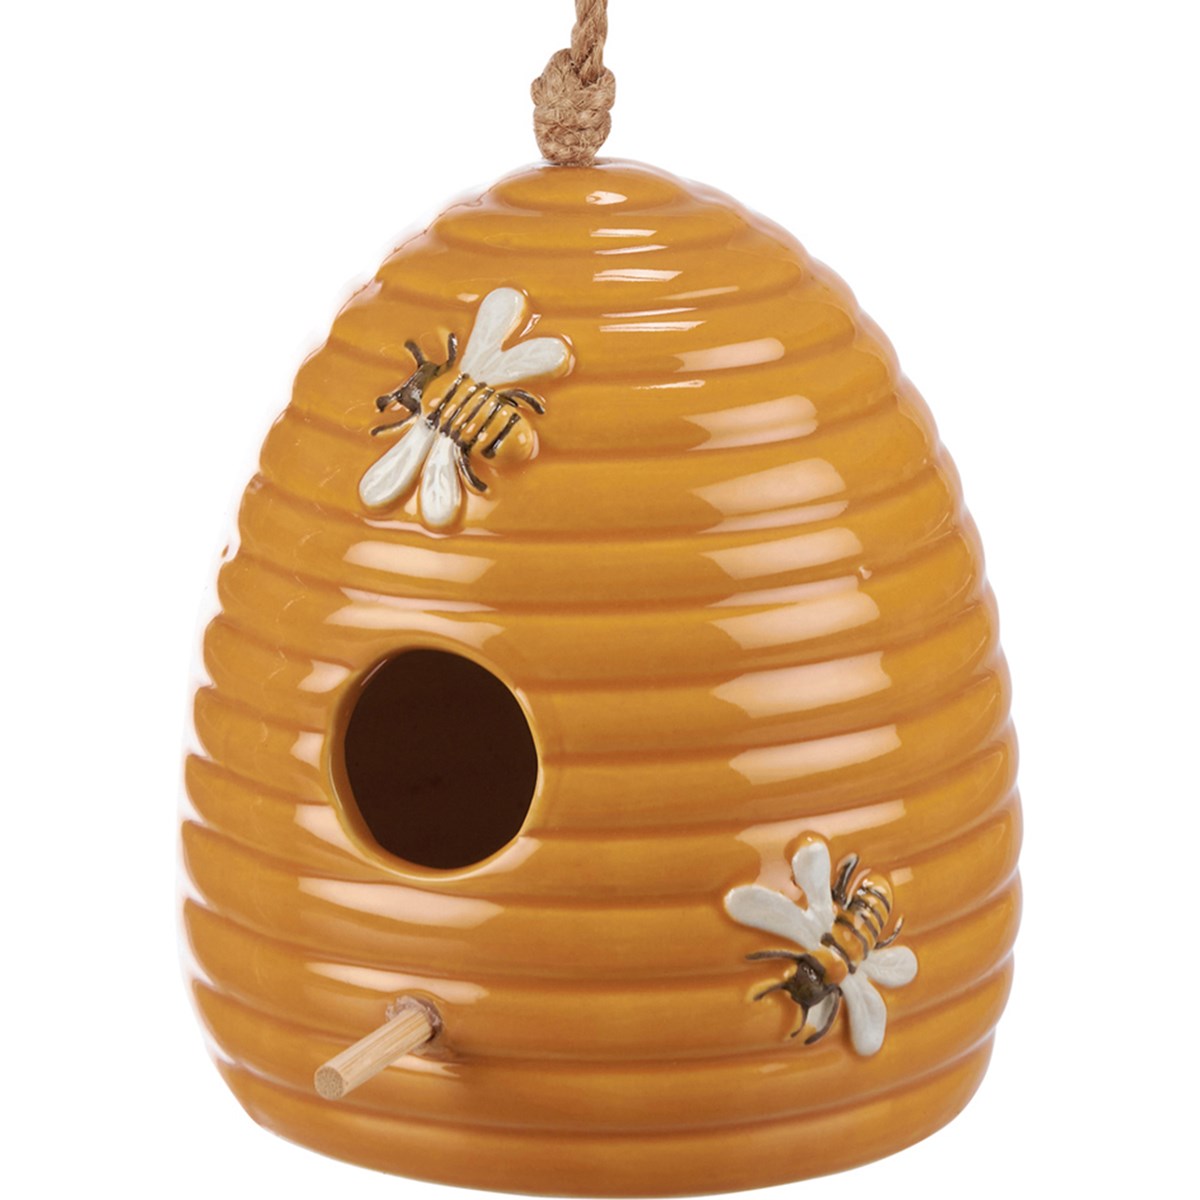 Beehive Birdhouse - Ceramic, Wood, Jute